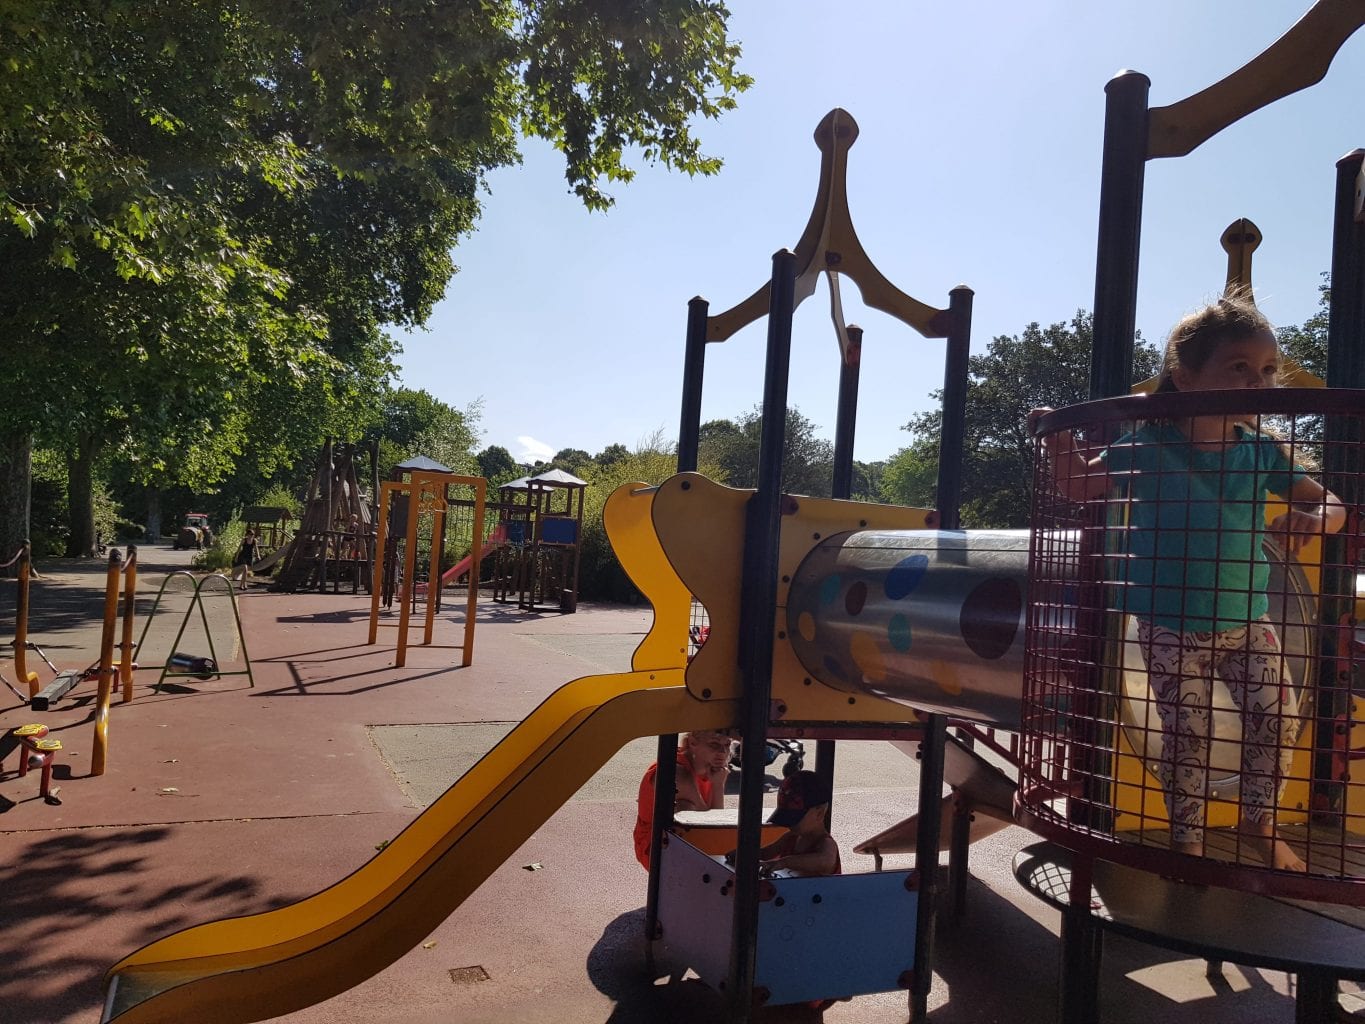 The Greenwich Park Playpark